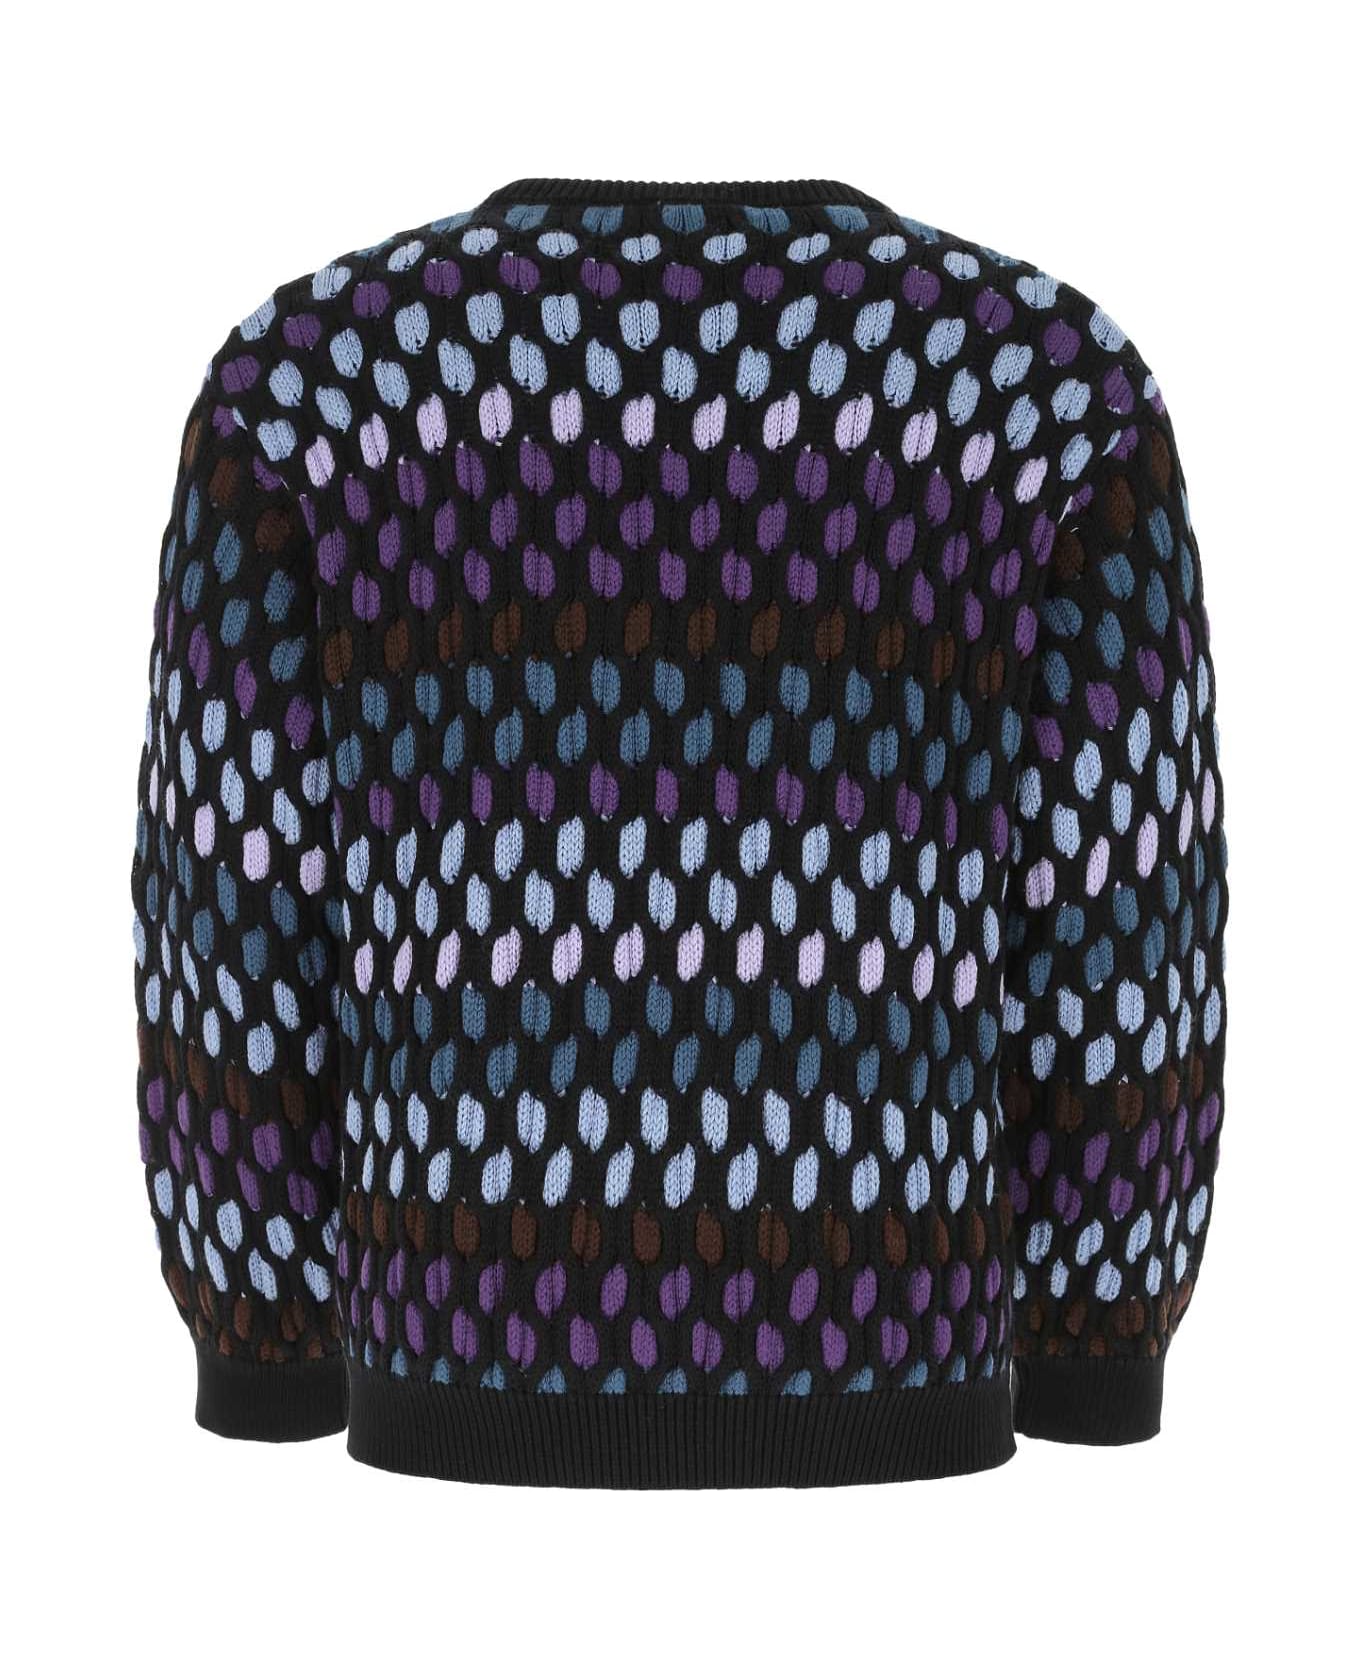 Koché Embroidered Cotton Blend Sweater - 001F フリース